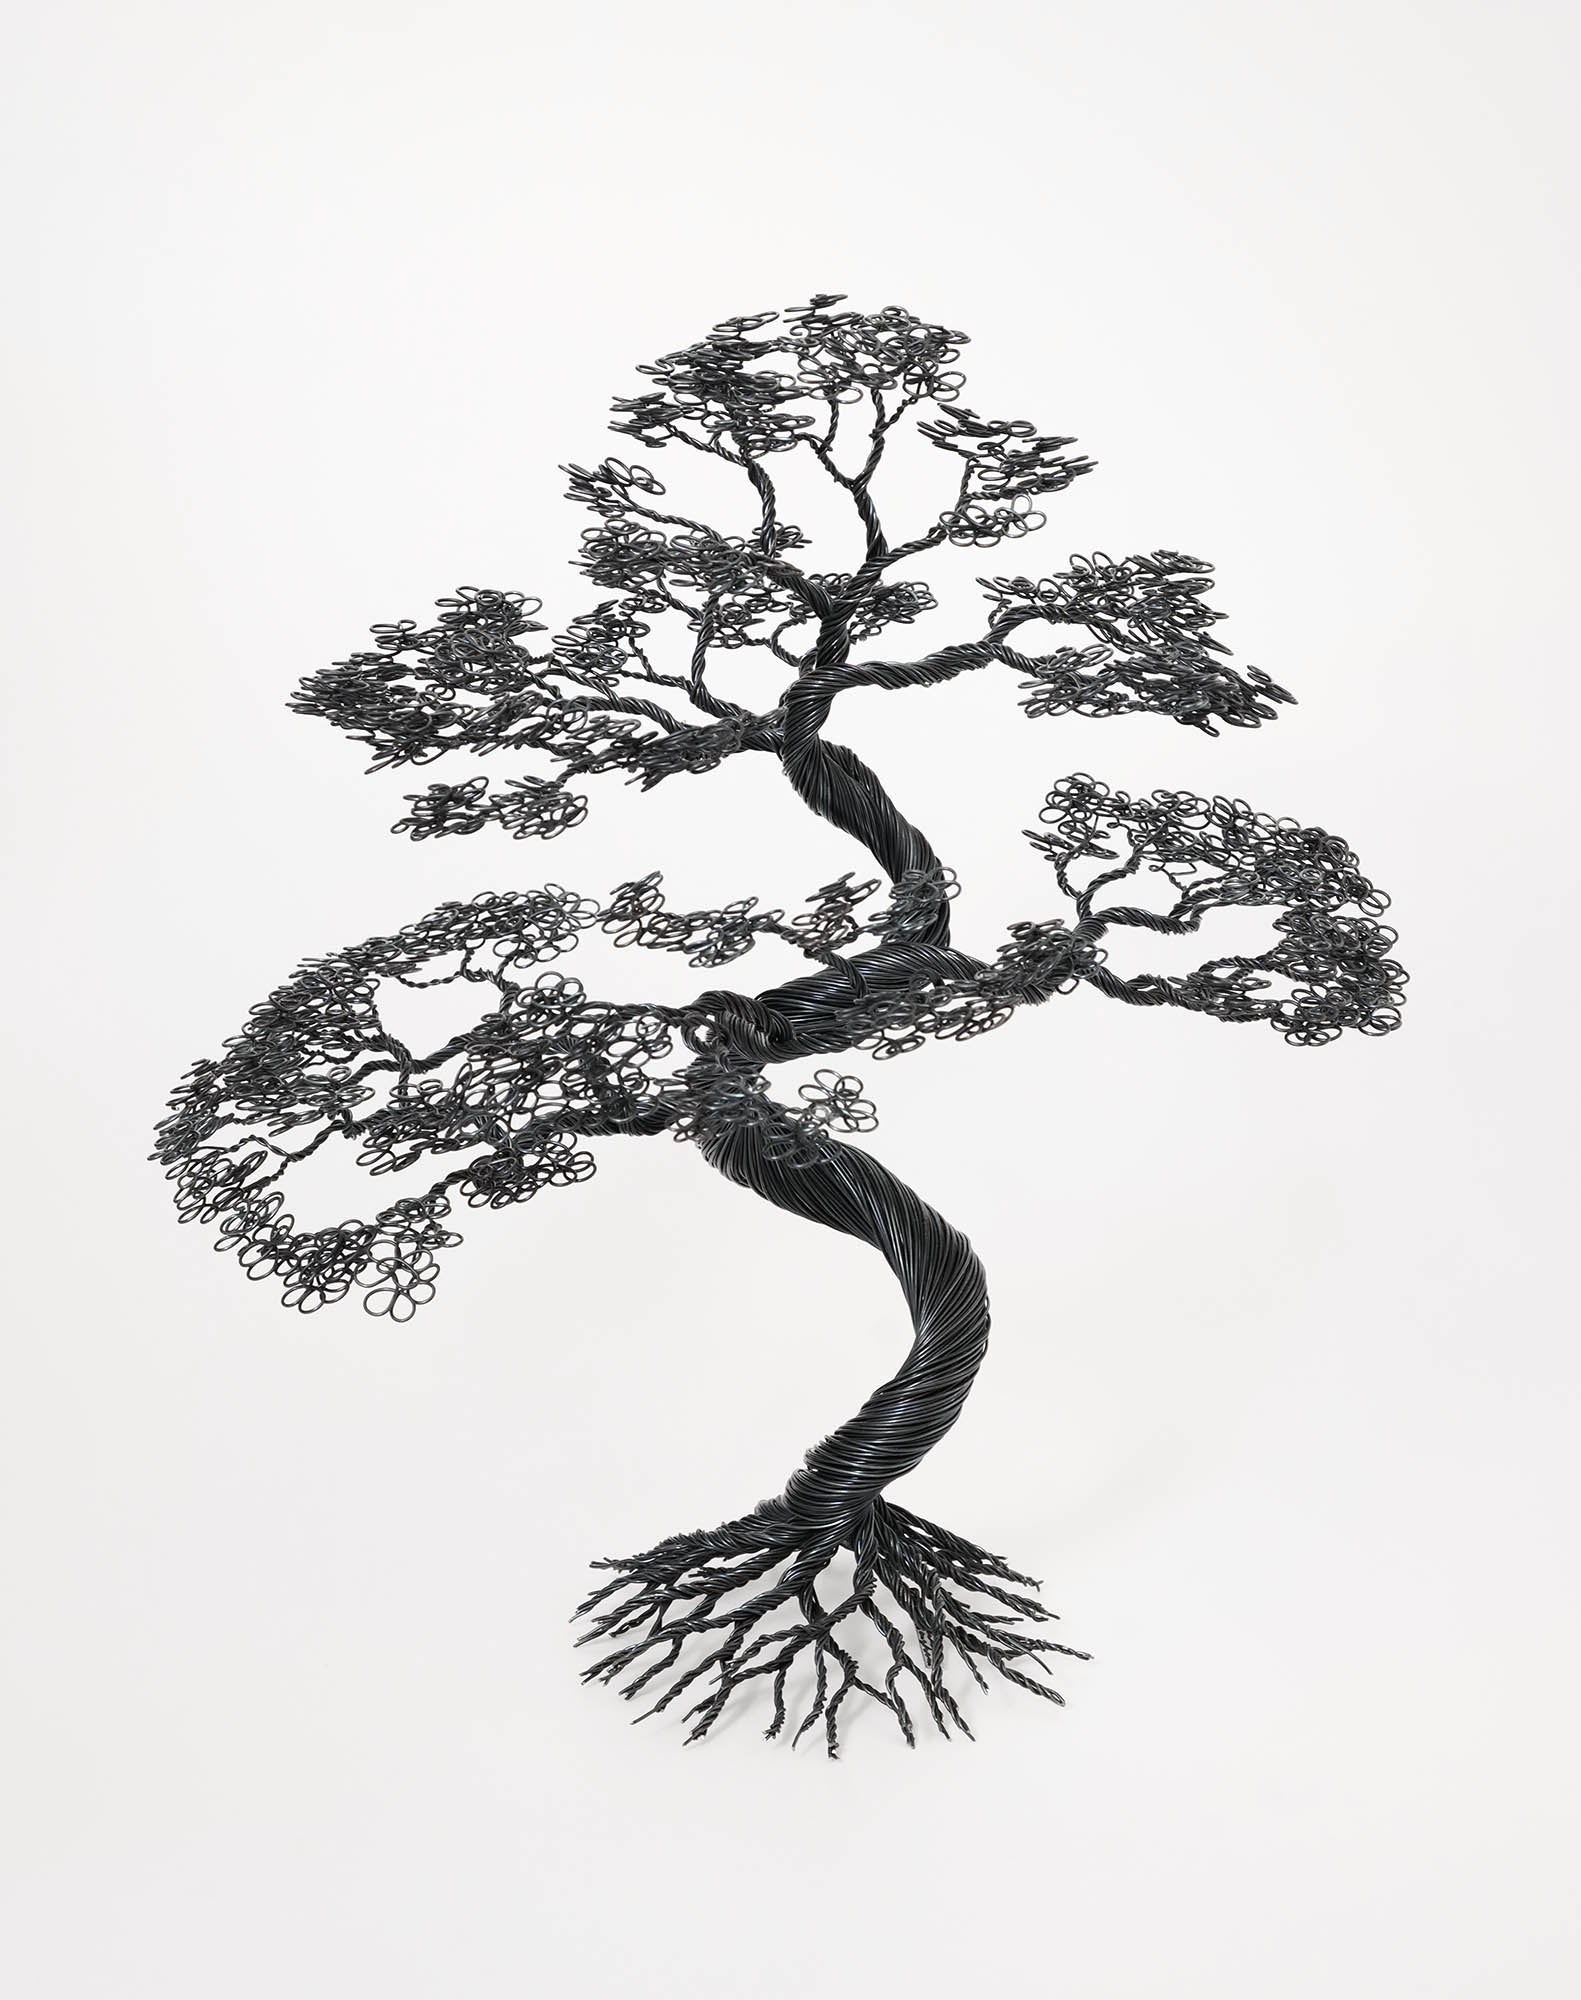 Bonsai tree - Black annealed iron wire